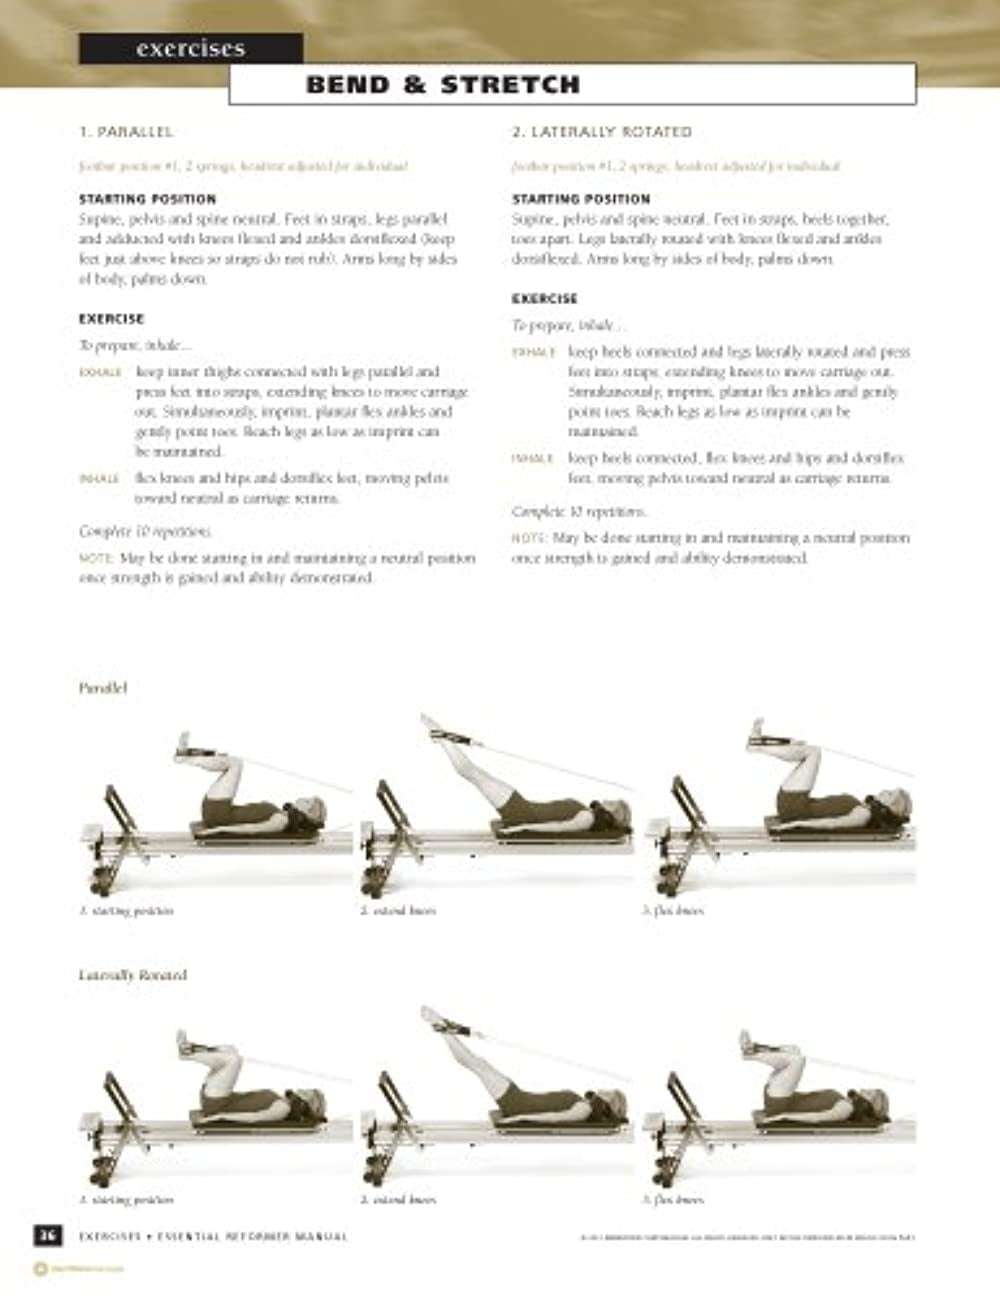 Stott Pilates Essential Reformer Manual-2nd Edition 